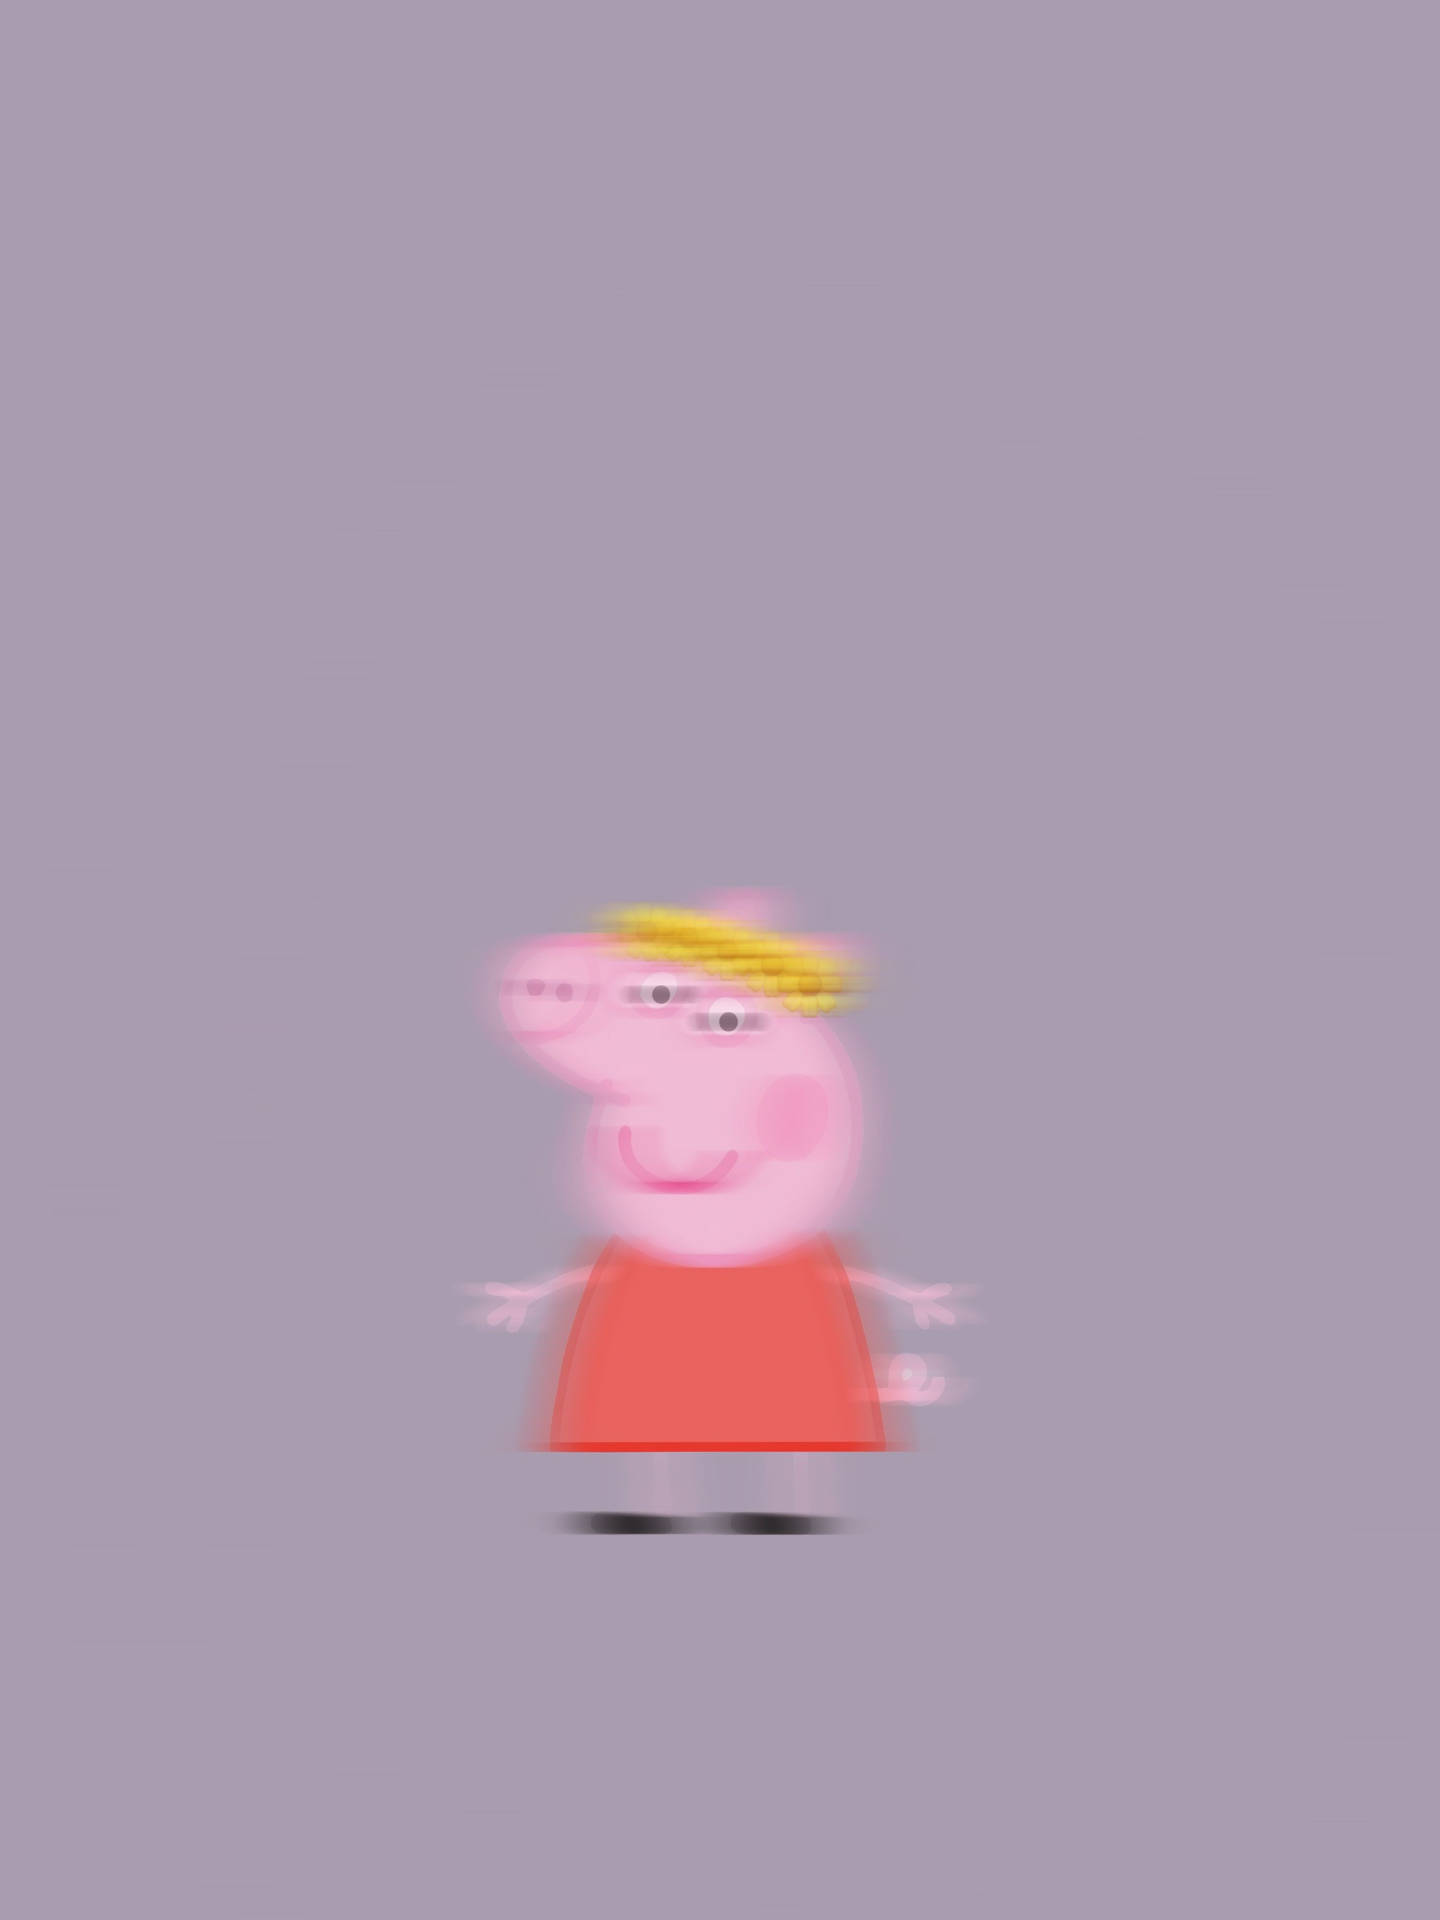 Peppa Pig Iphone Blurry Panic Meme Background